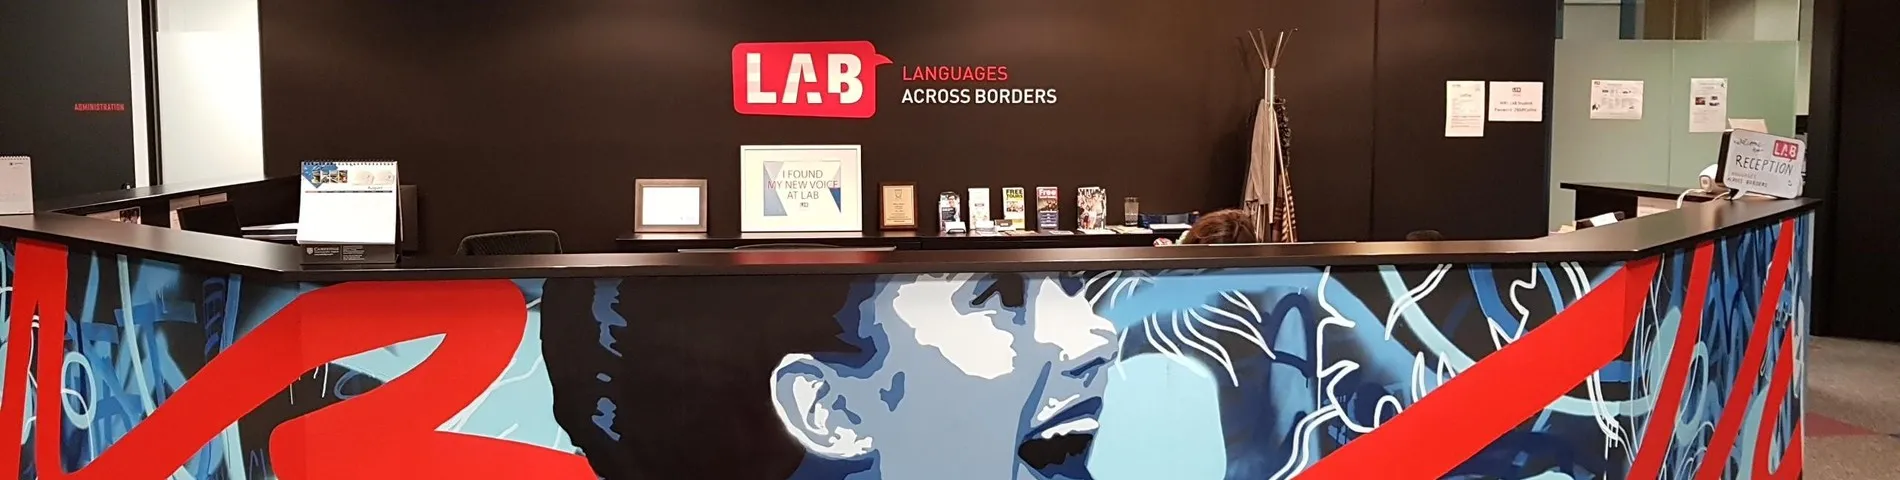 LAB - Languages Across Borders photo 1